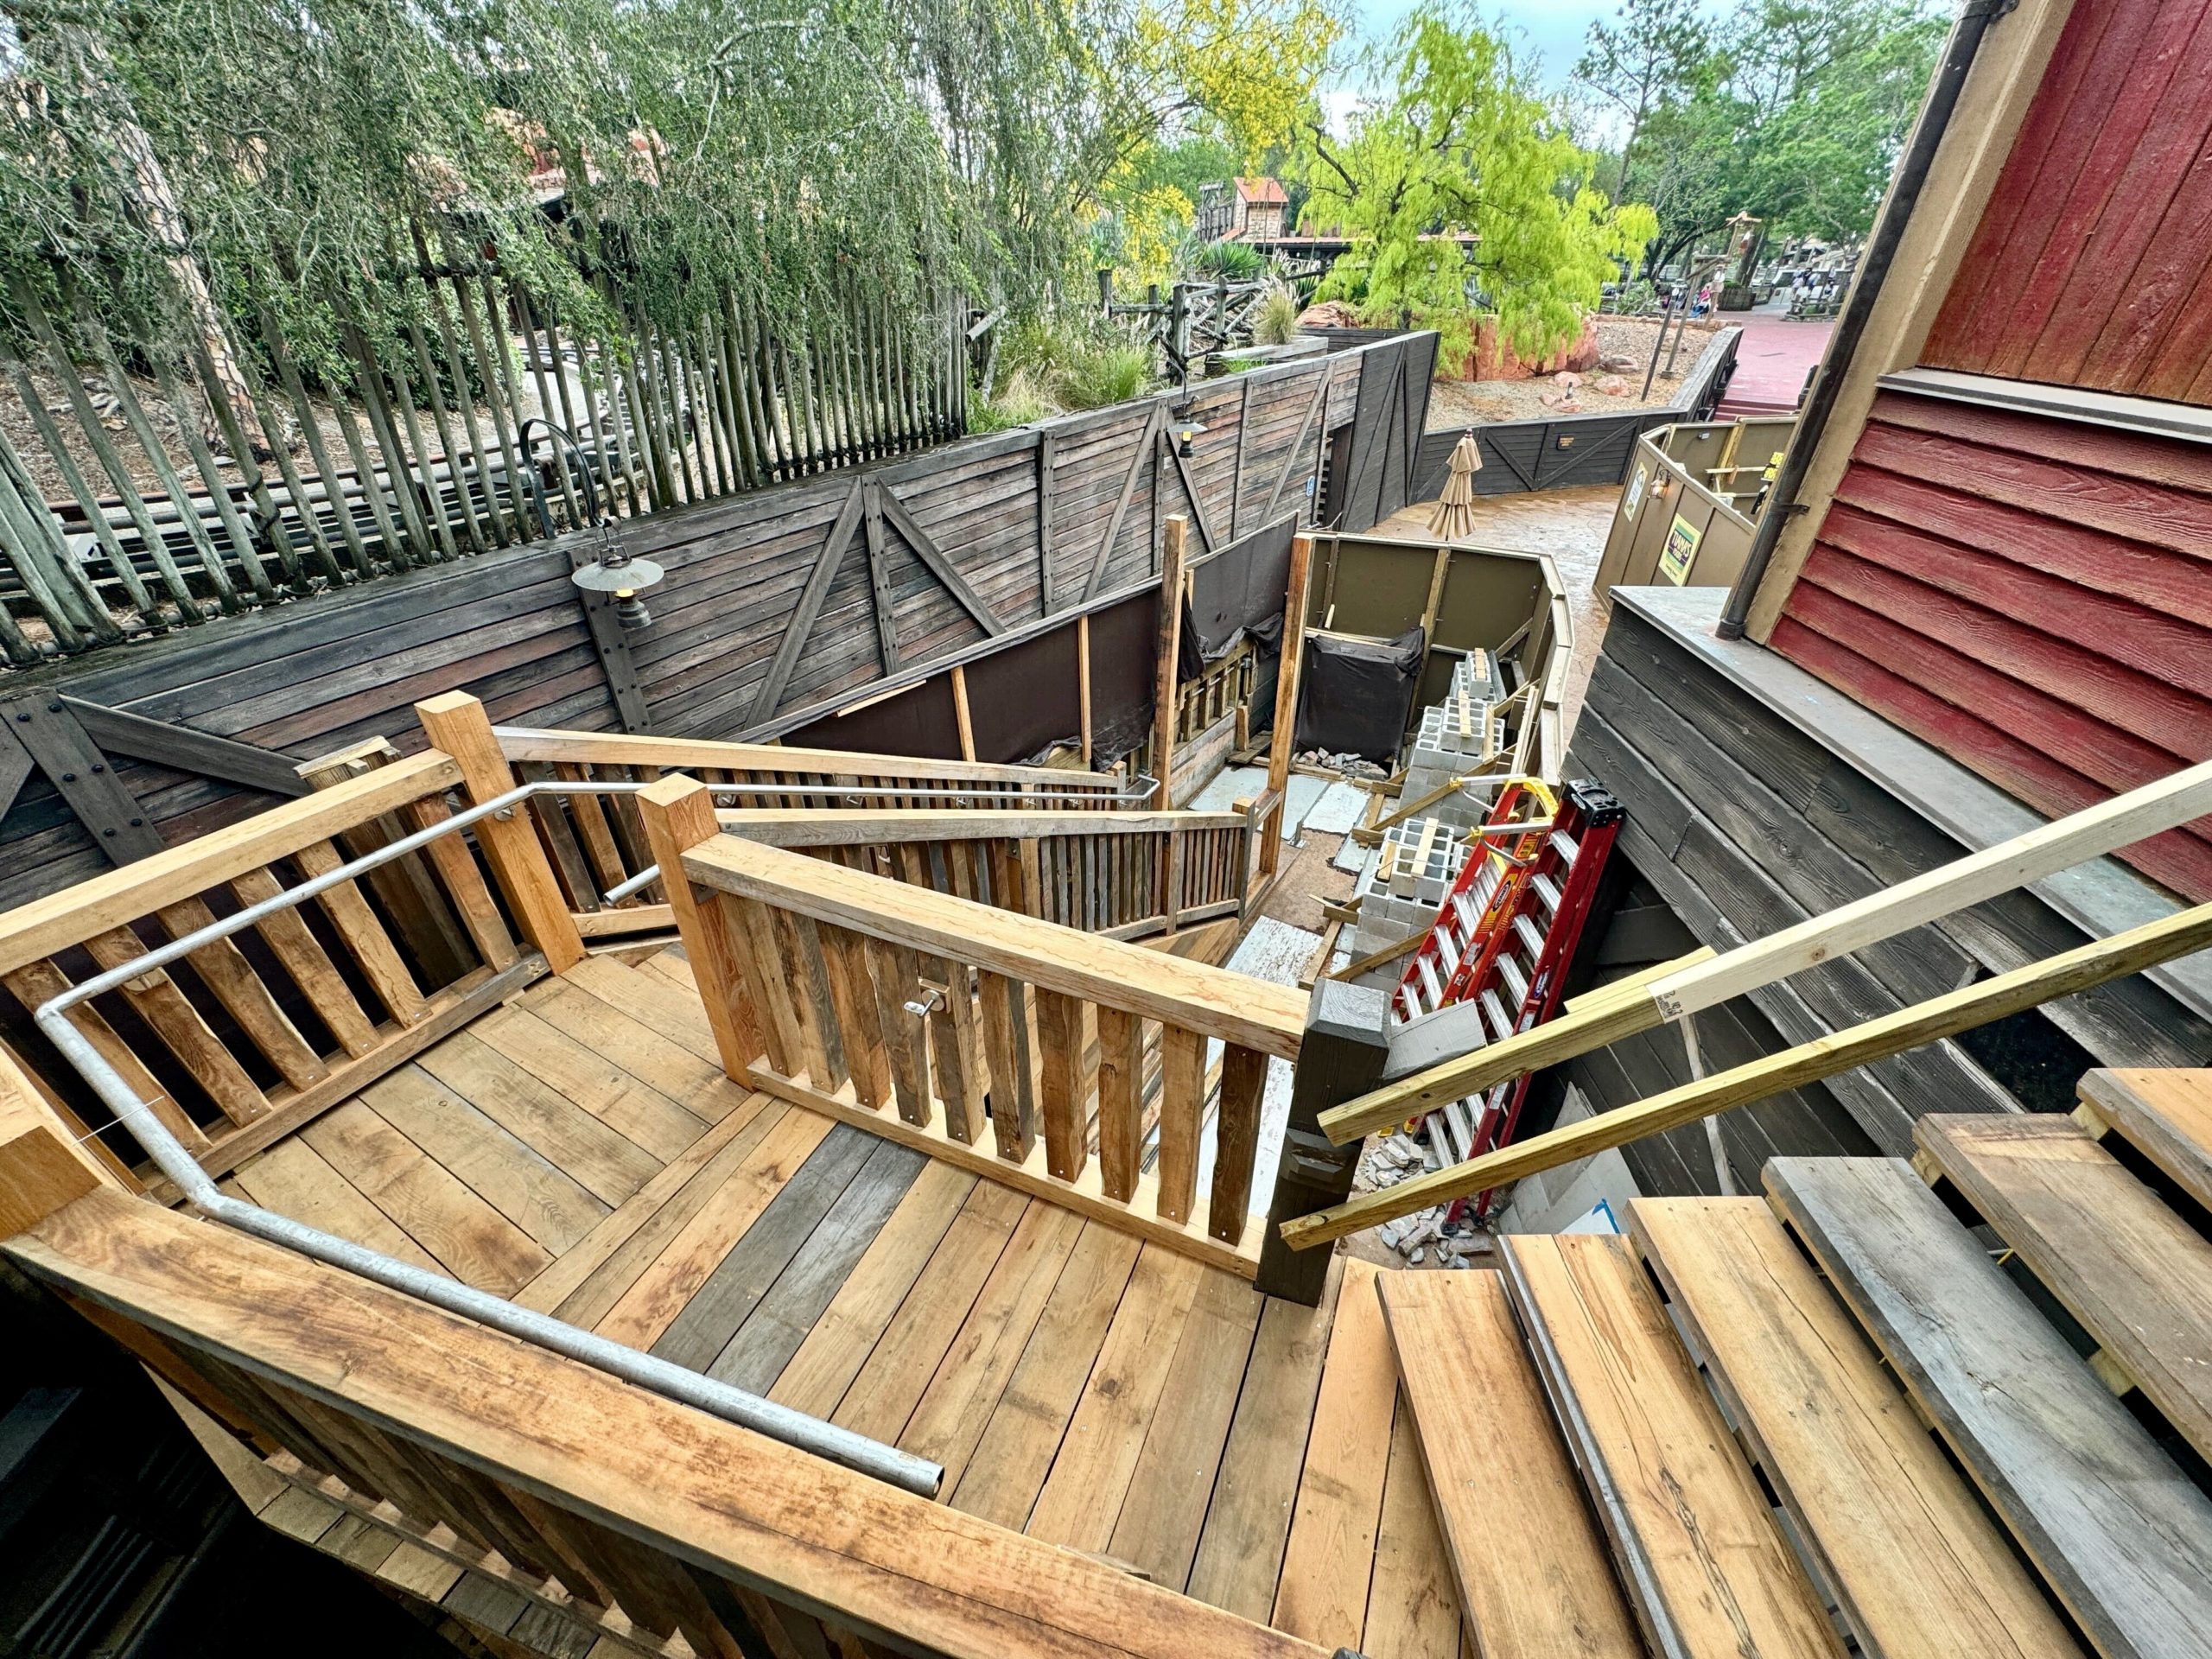 Construction at Tiana's Bayou Adventure in Magic Kingdom